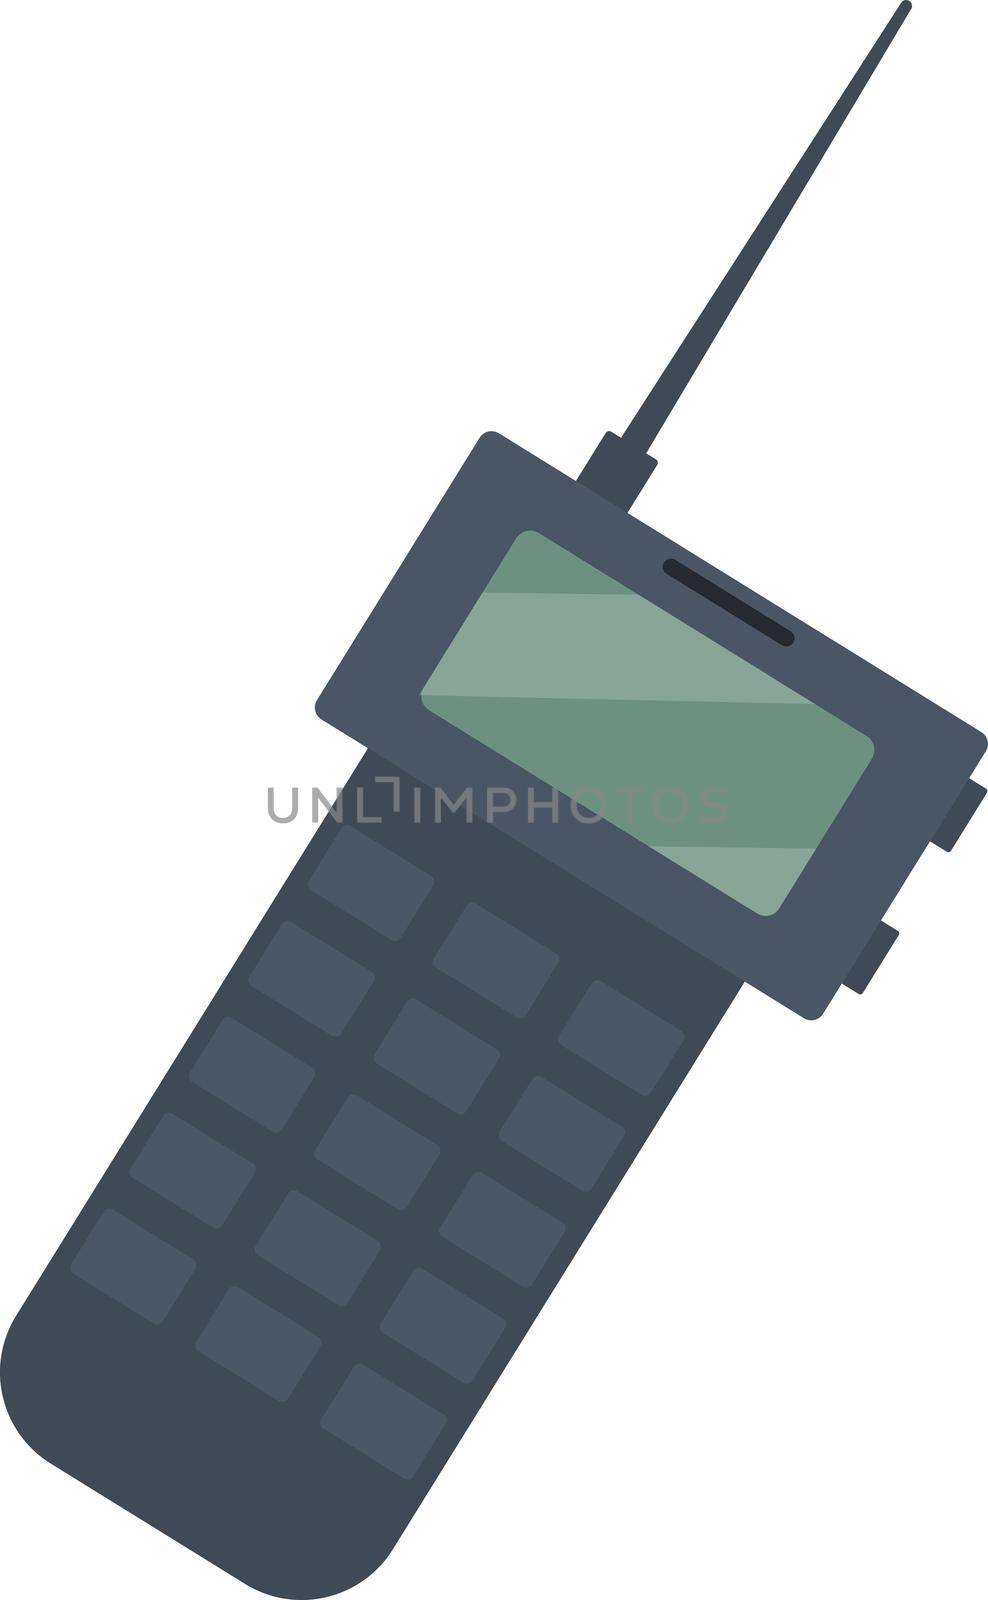 Black walkie talkie, illustration, vector on white background. by Morphart